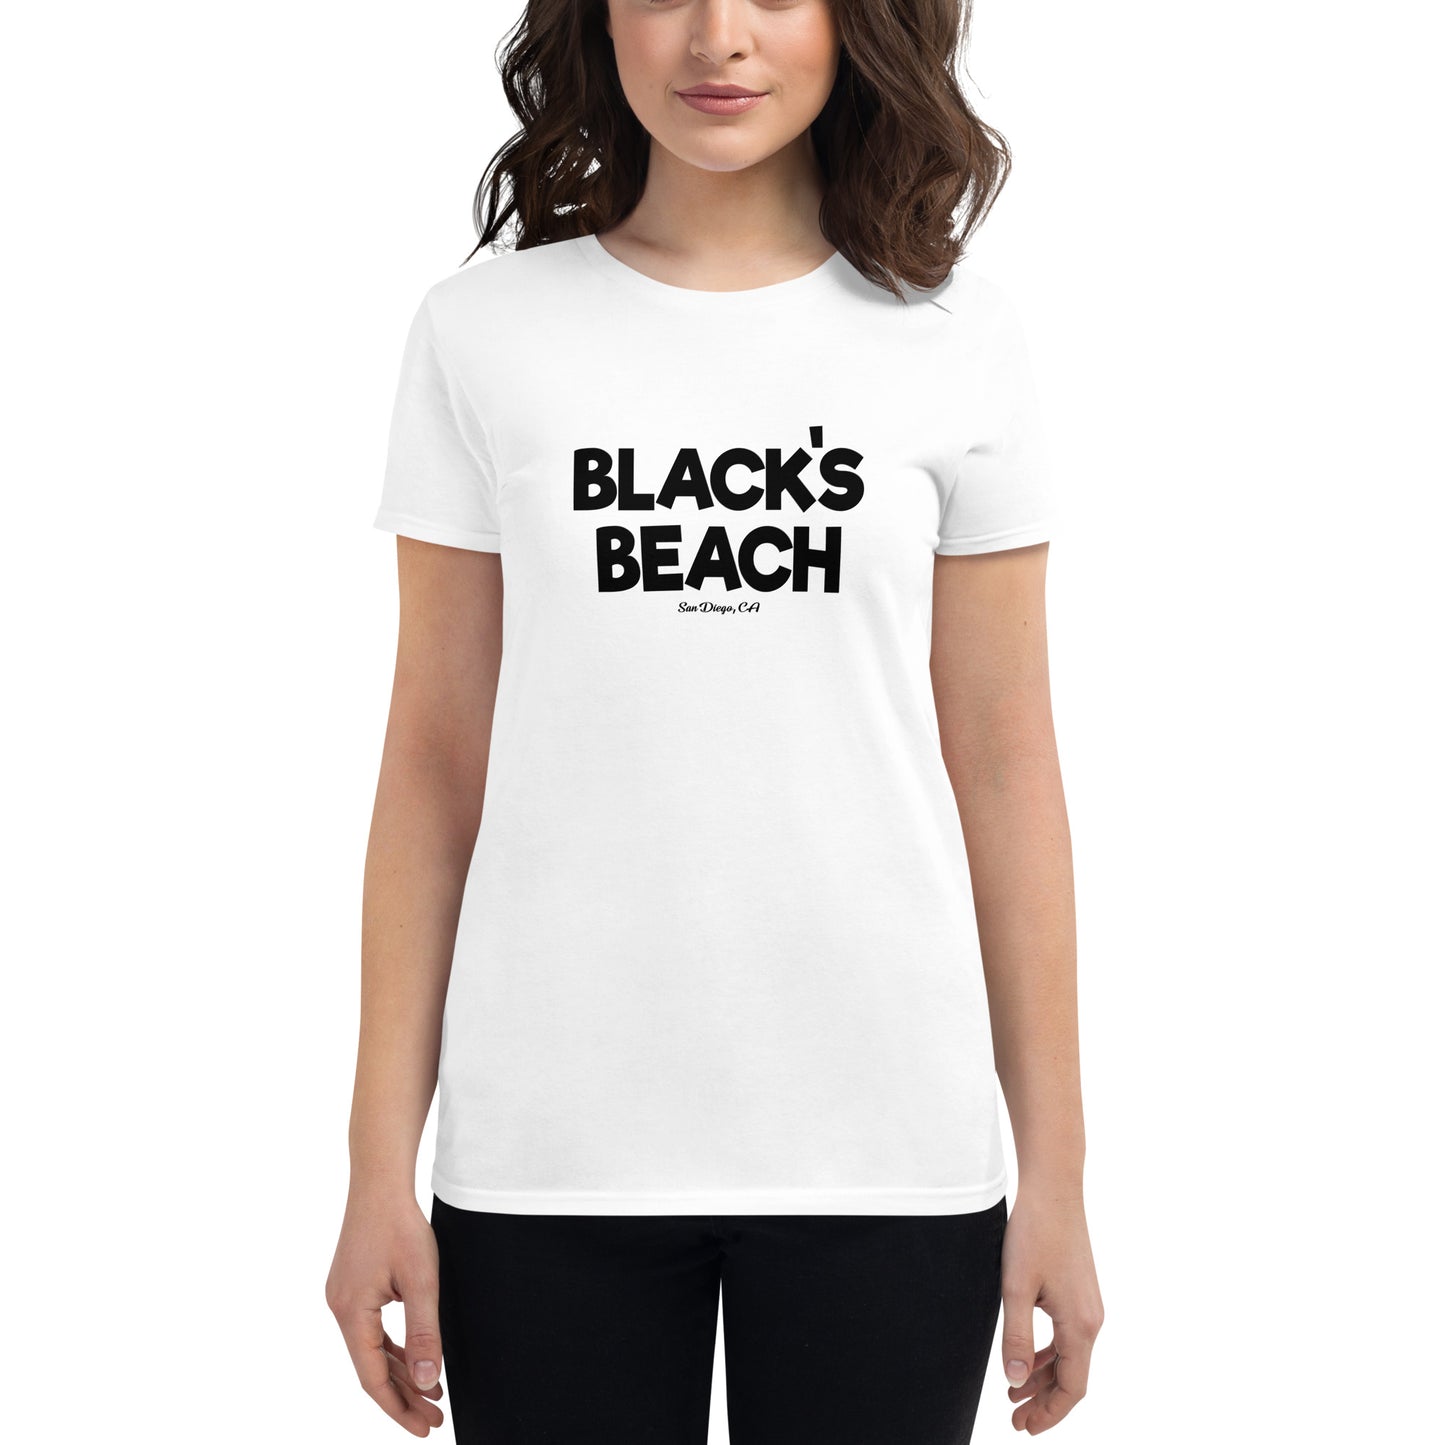 Black's Beach  Tees / Style 01 / Women's short sleeve t-shirt